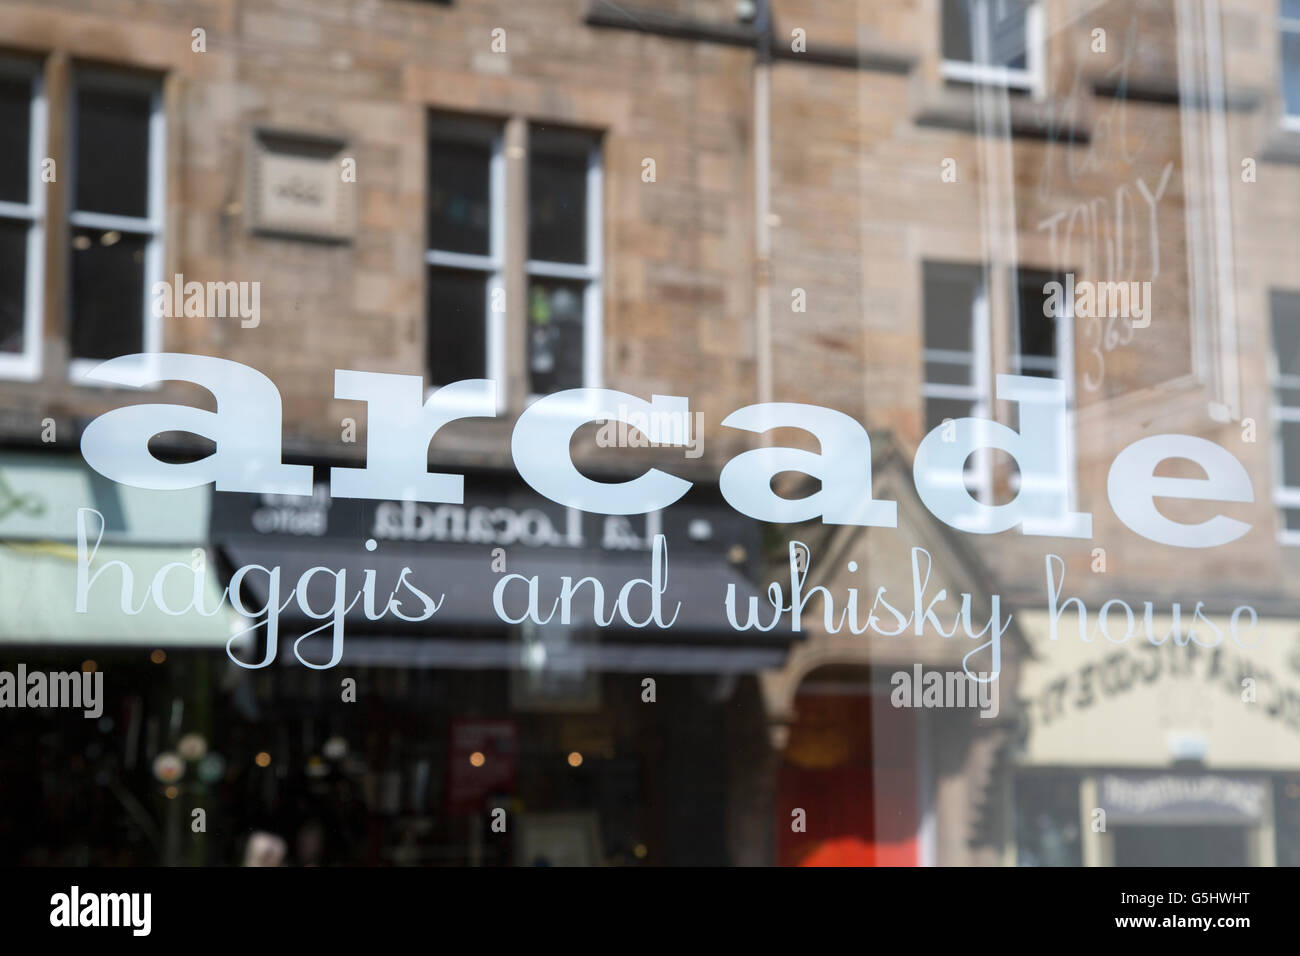 Arcade Haggis and Whisky House, Edinburgh, Scotland, UK Stock Photo